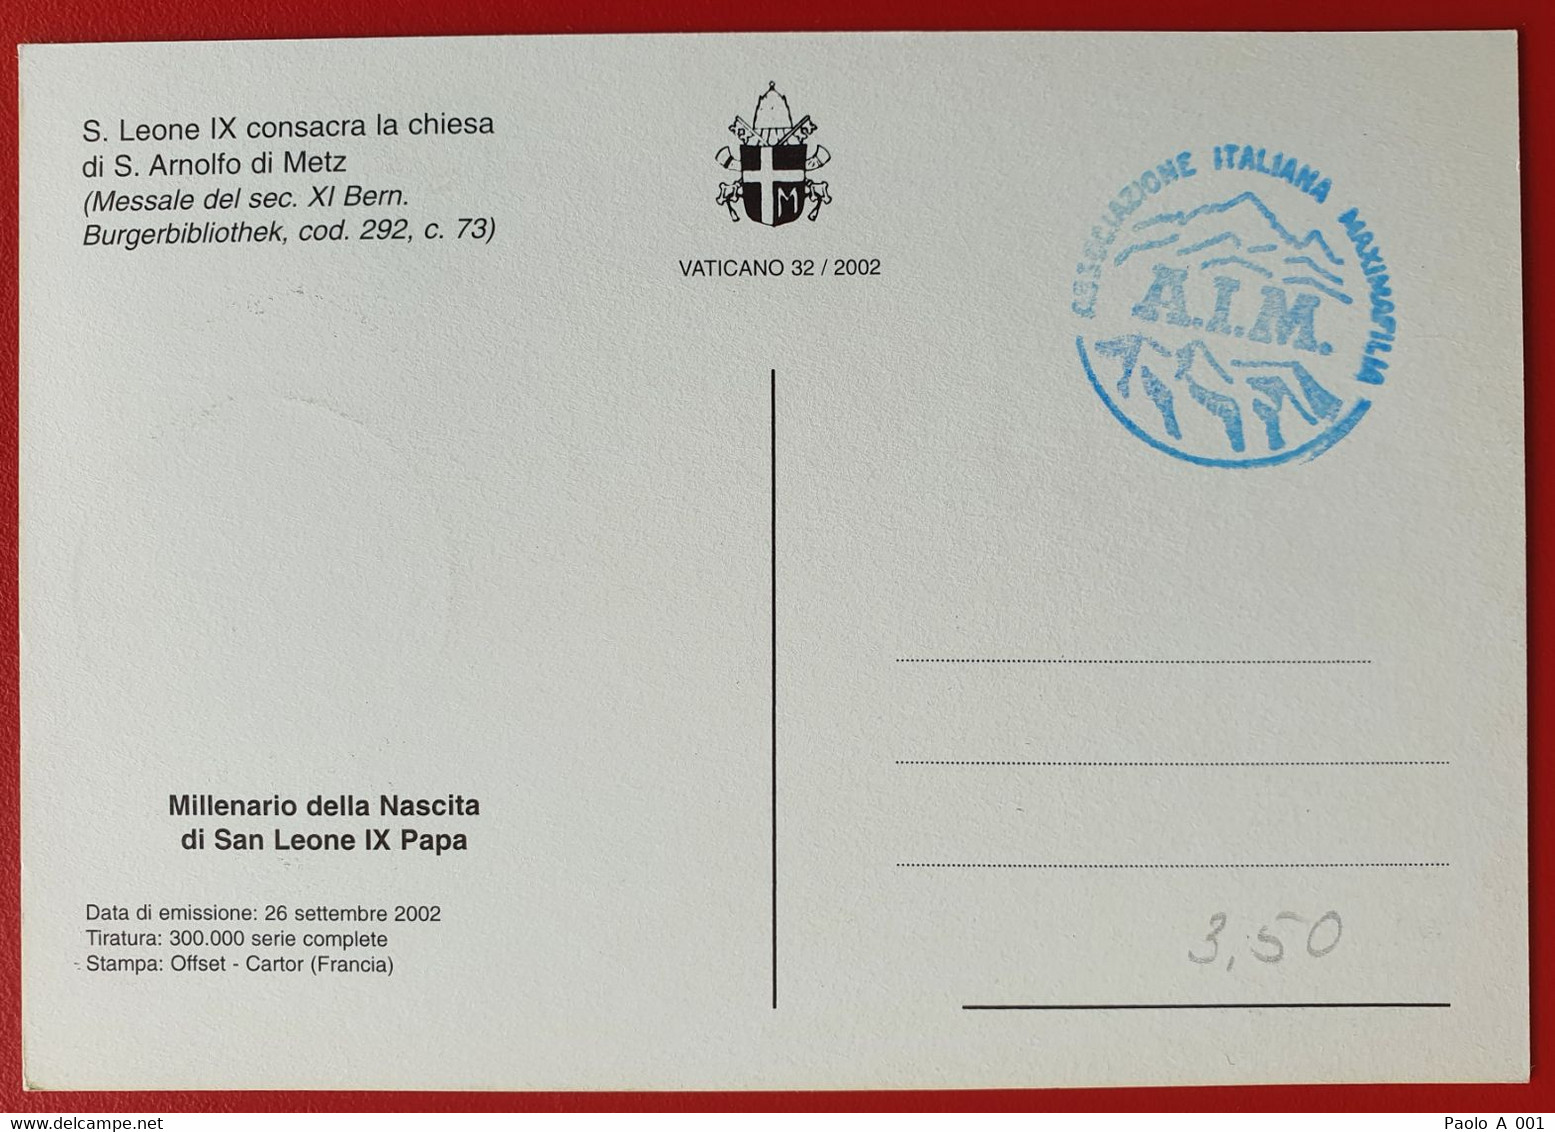 VATICANO VATIKAN VATICAN 2002 POPE LEO IX CHURCH ARNULF OF METZ FD MAXIMUM CARD BURGERBIBLIOTHEK BERN - Lettres & Documents